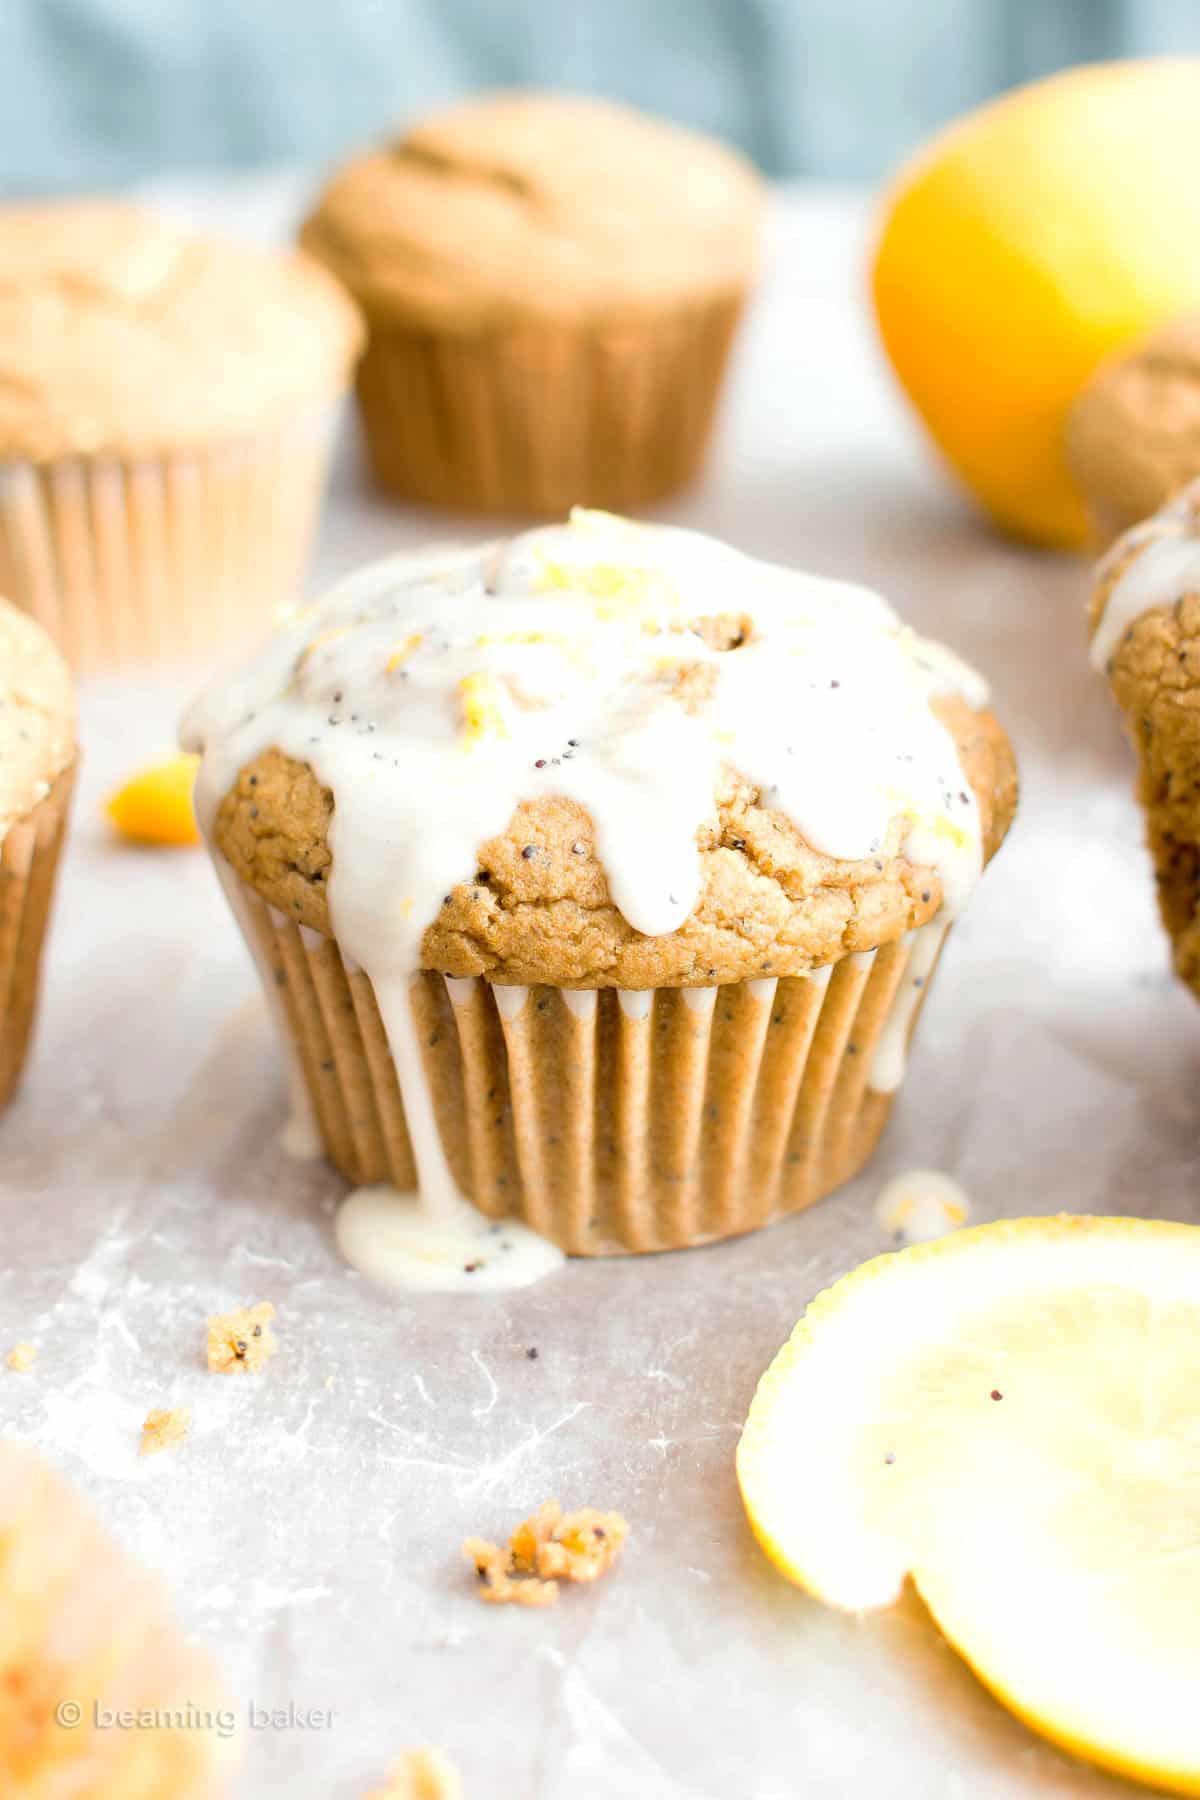 Lemon muffin drenched in lemon glaze and slices of lemon